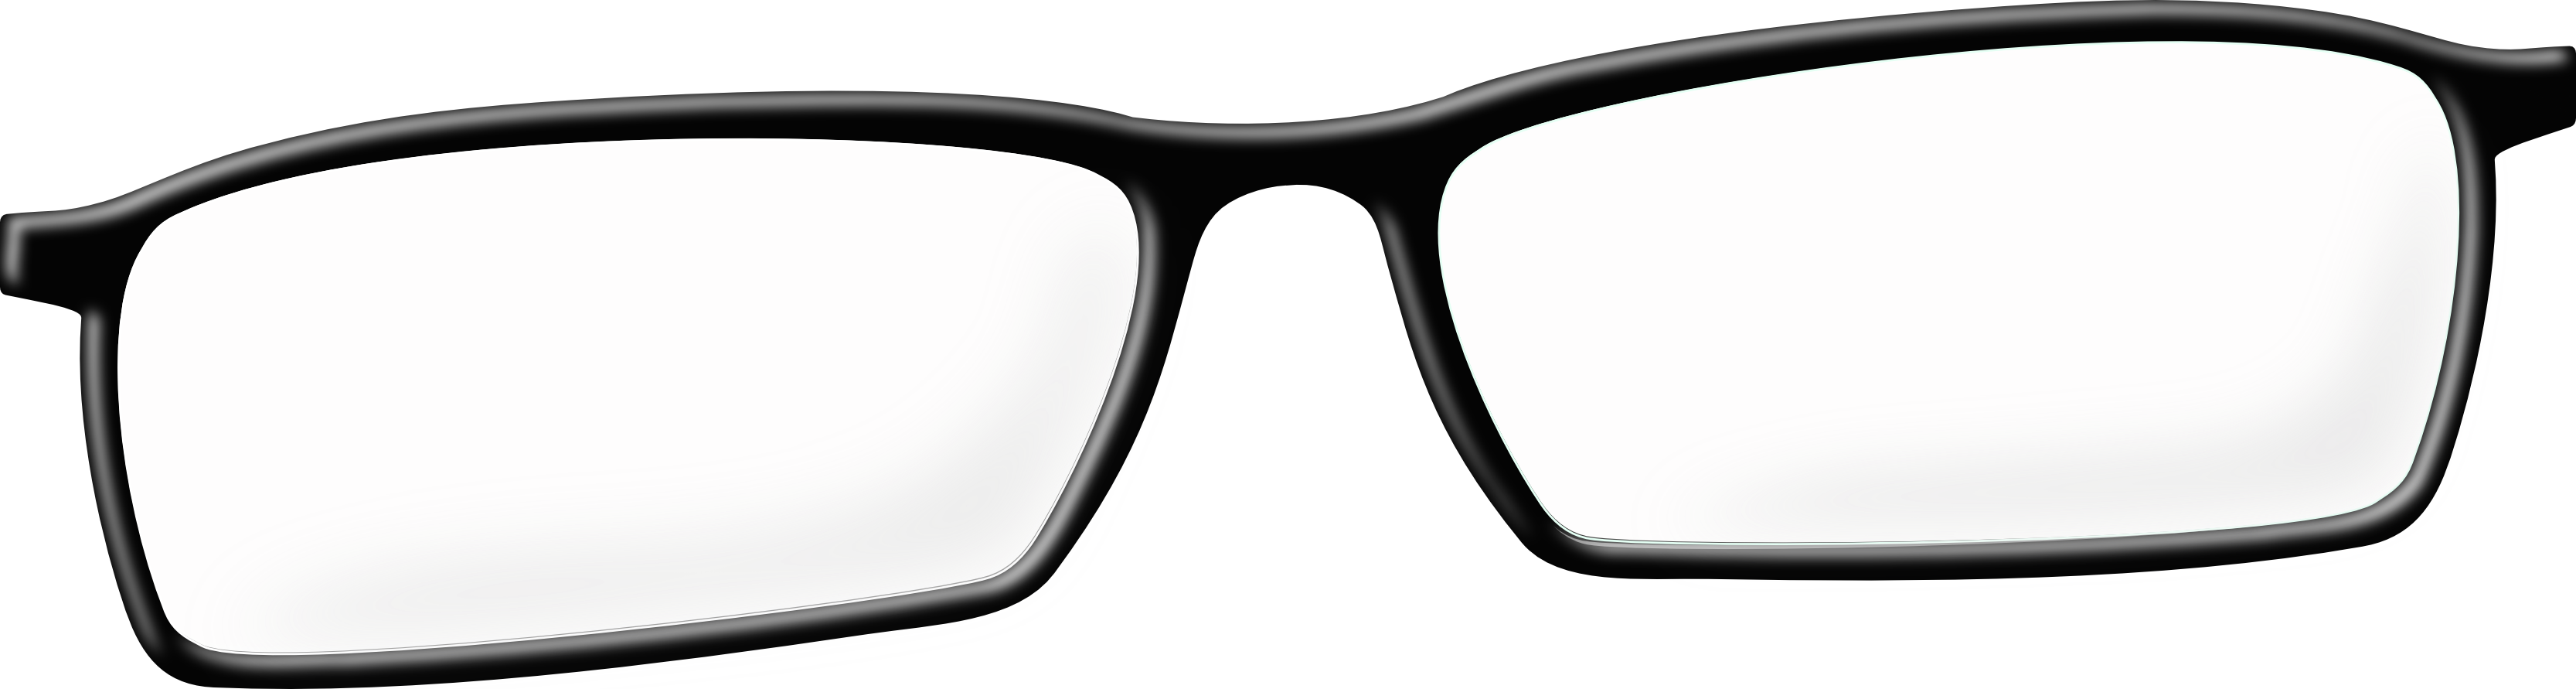 Glasses Background PNG Image